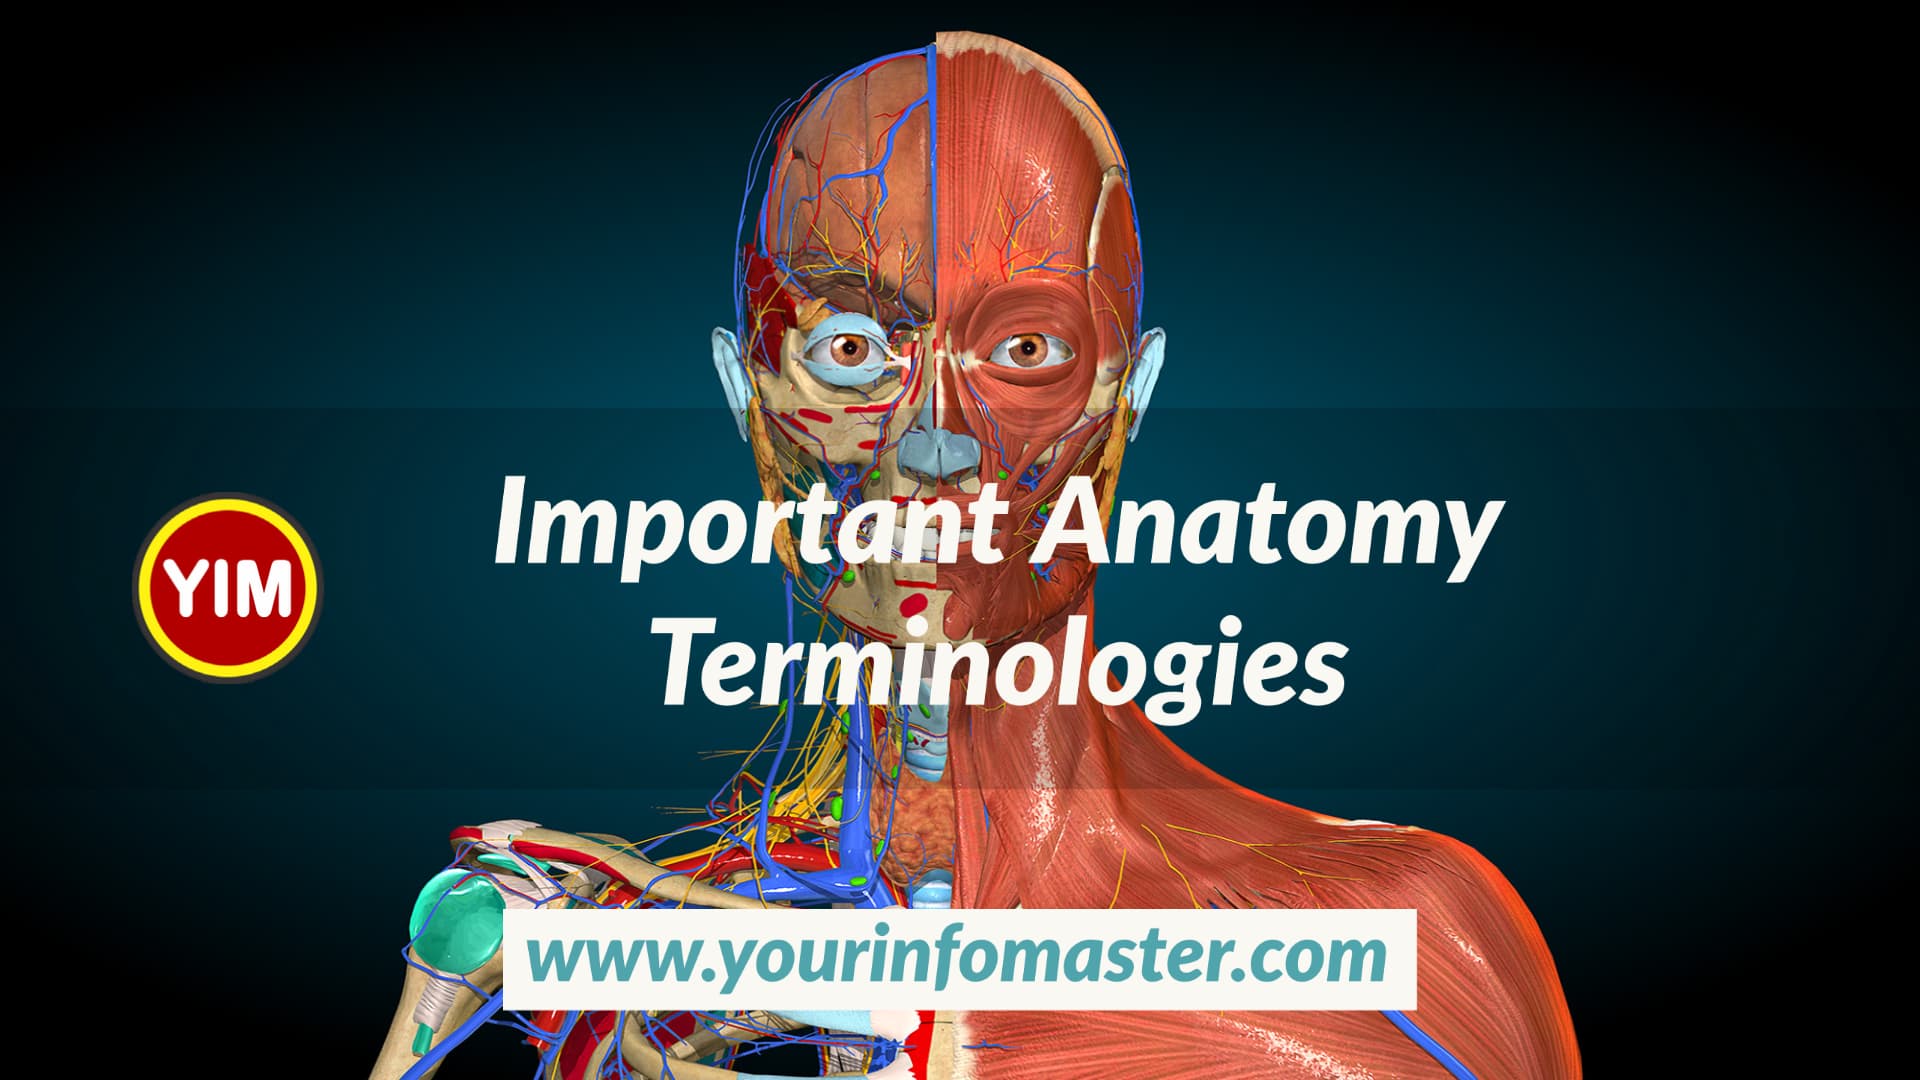 Anatomy, Anatomy Terminology, Important Anatomy Terminologies, medical terminology, medical terminology book, Pharmacy Technician, what is anatomy